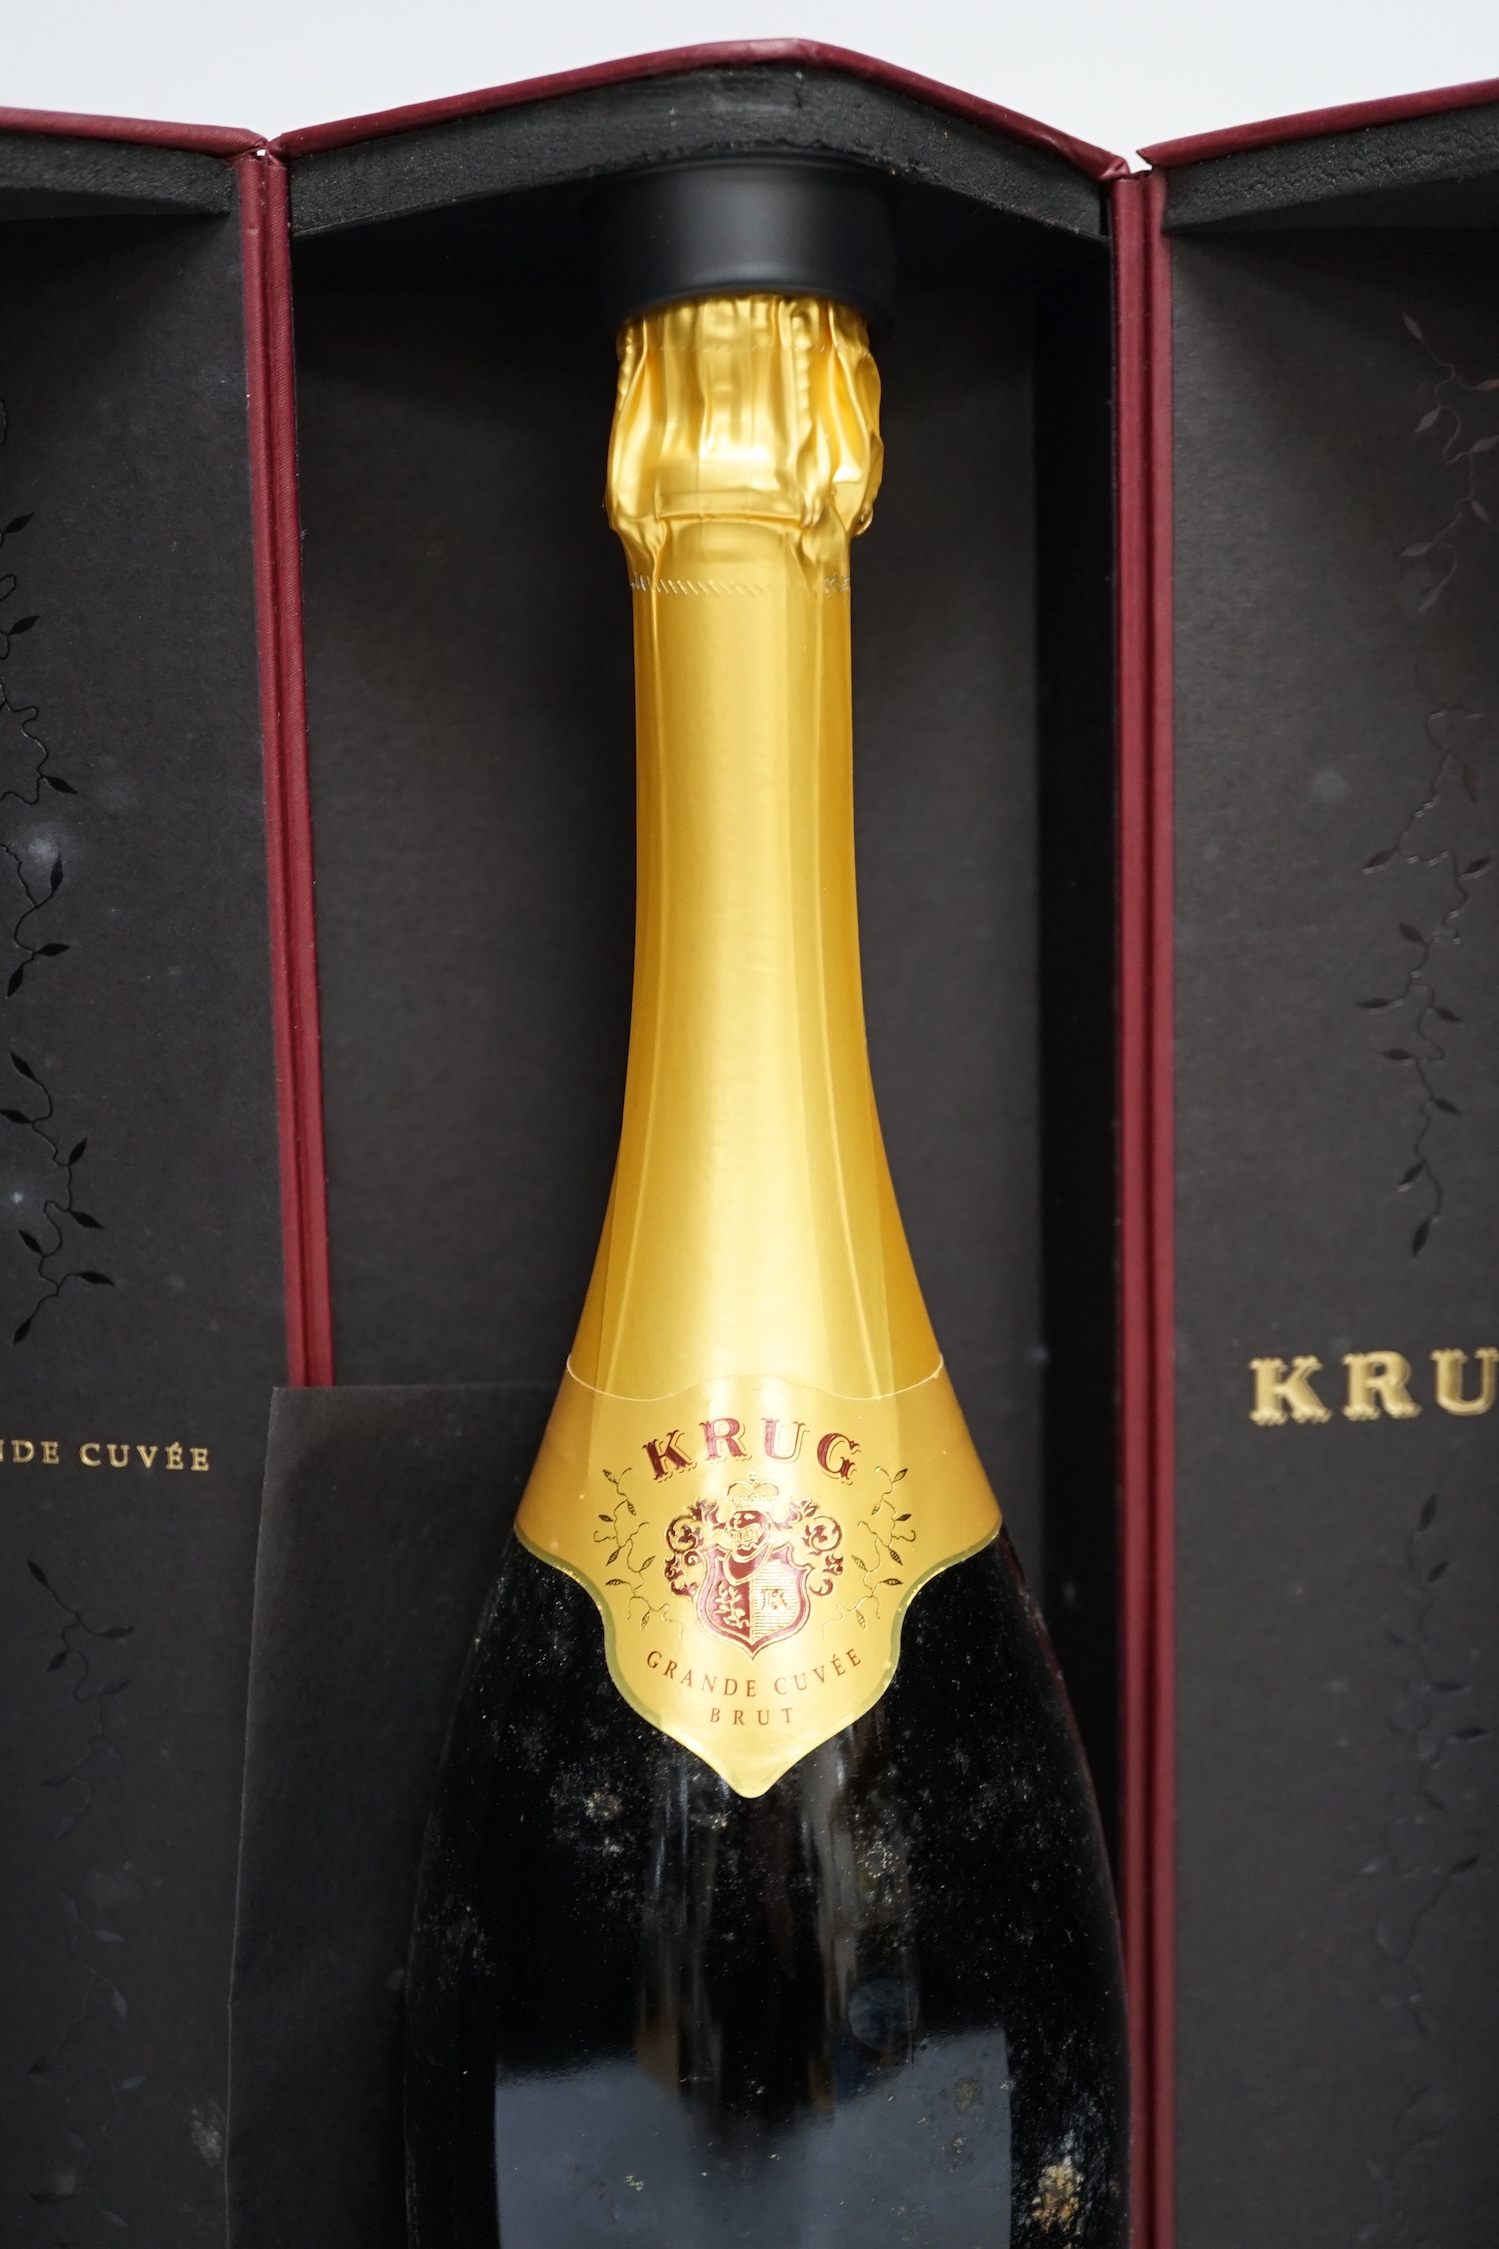 A boxed bottle of Krug Grande Cuvee Champagne